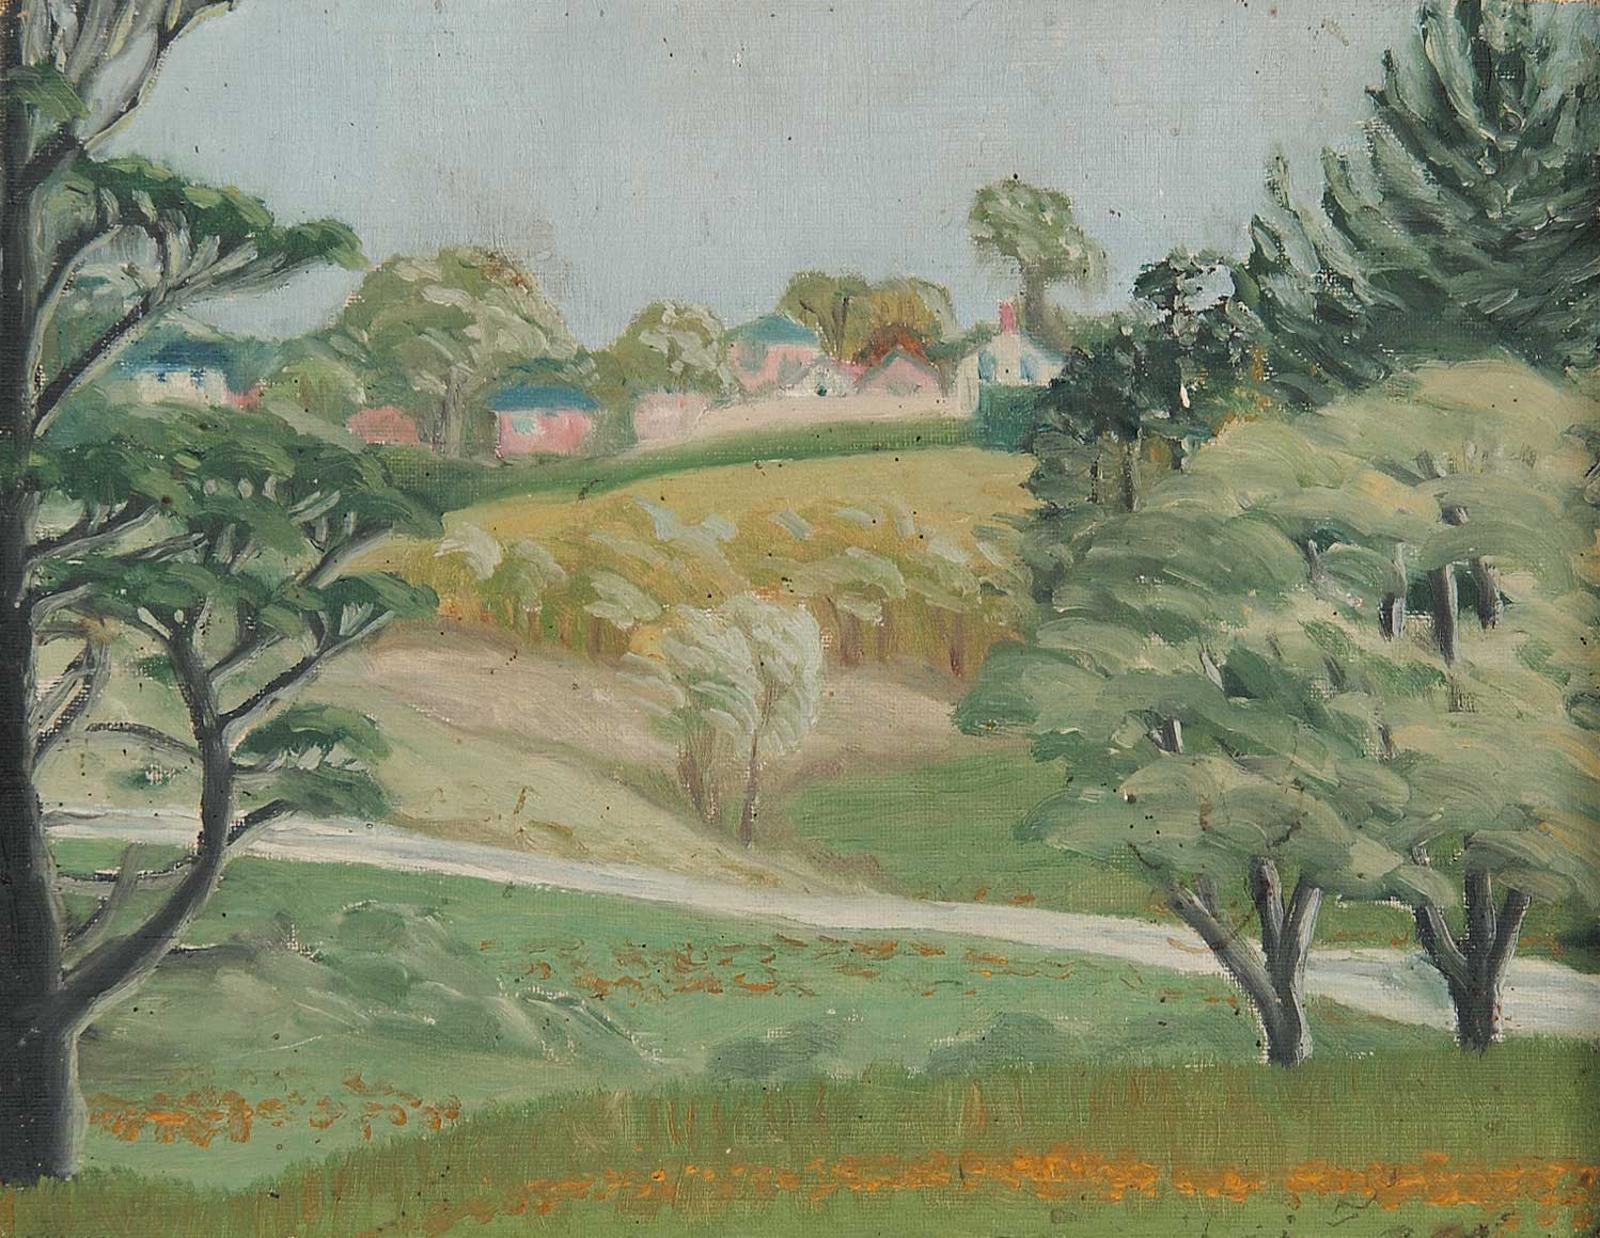 Bertram Richard Brooker (1888-1955) - View Across Ravine